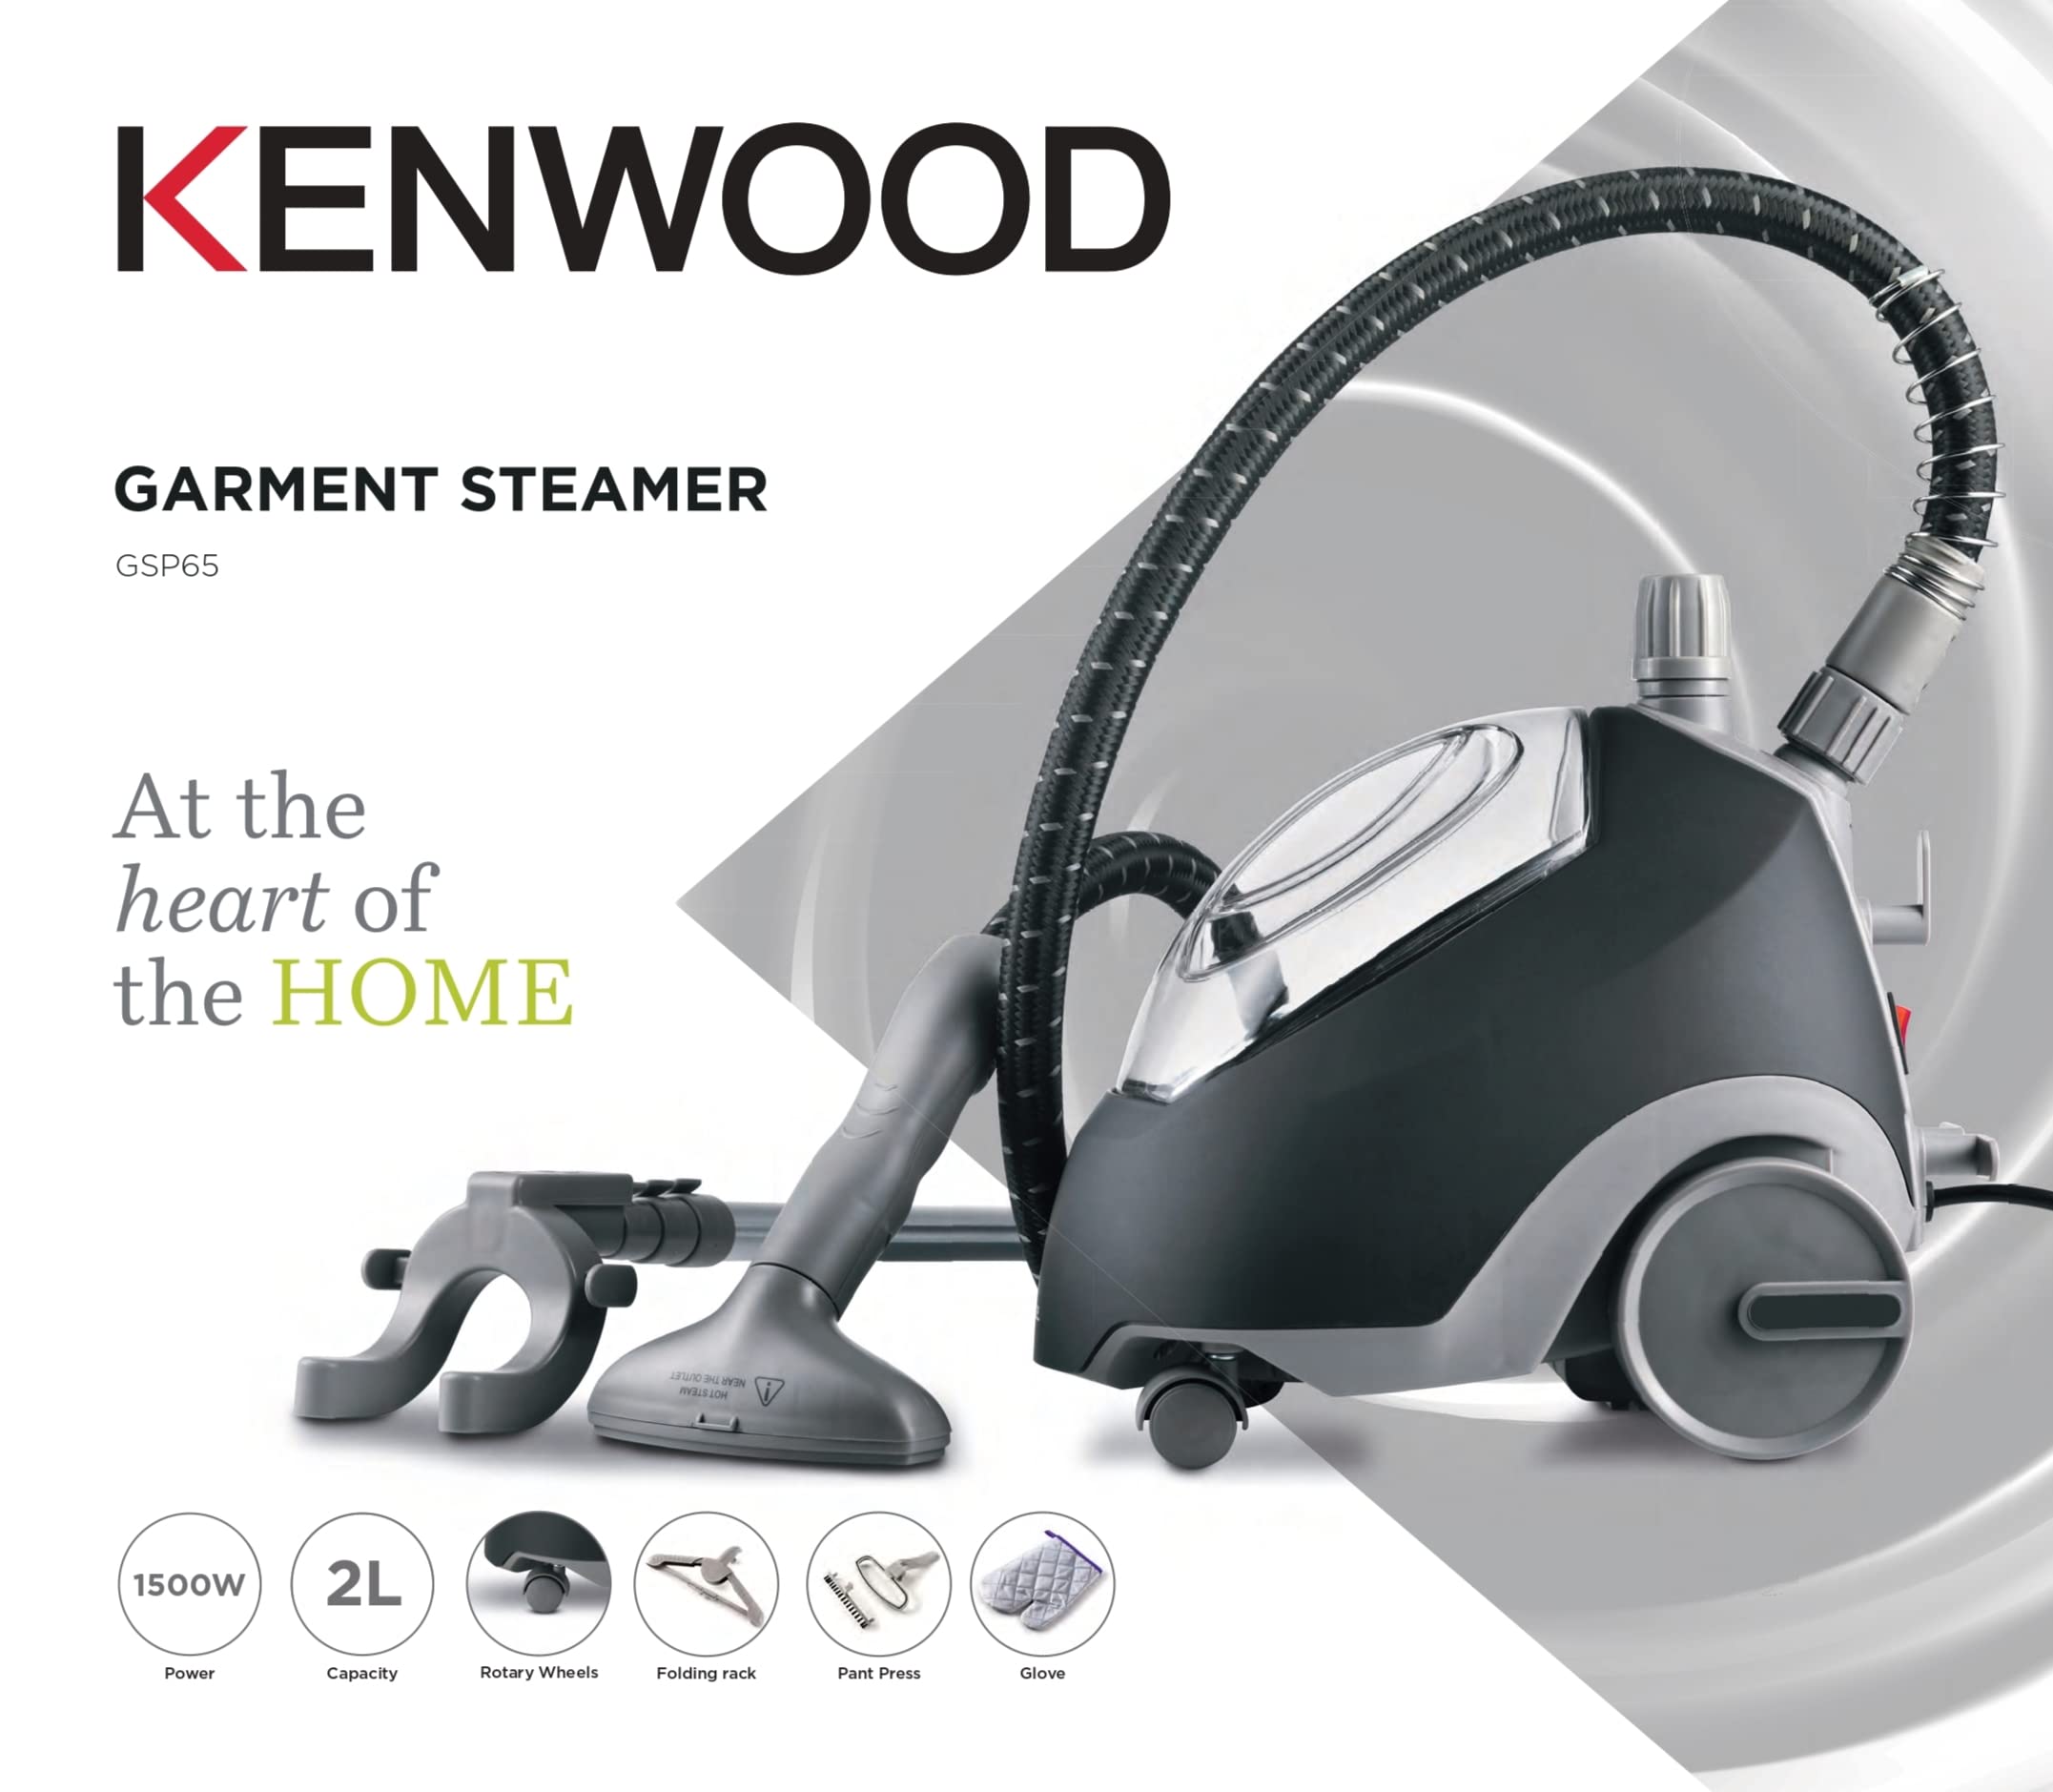 KENWOOD Garment Steamer 1500W with 2L Water Tank Capacity, Rotary Wheels, Folding Rack, Trouser Press, Glove